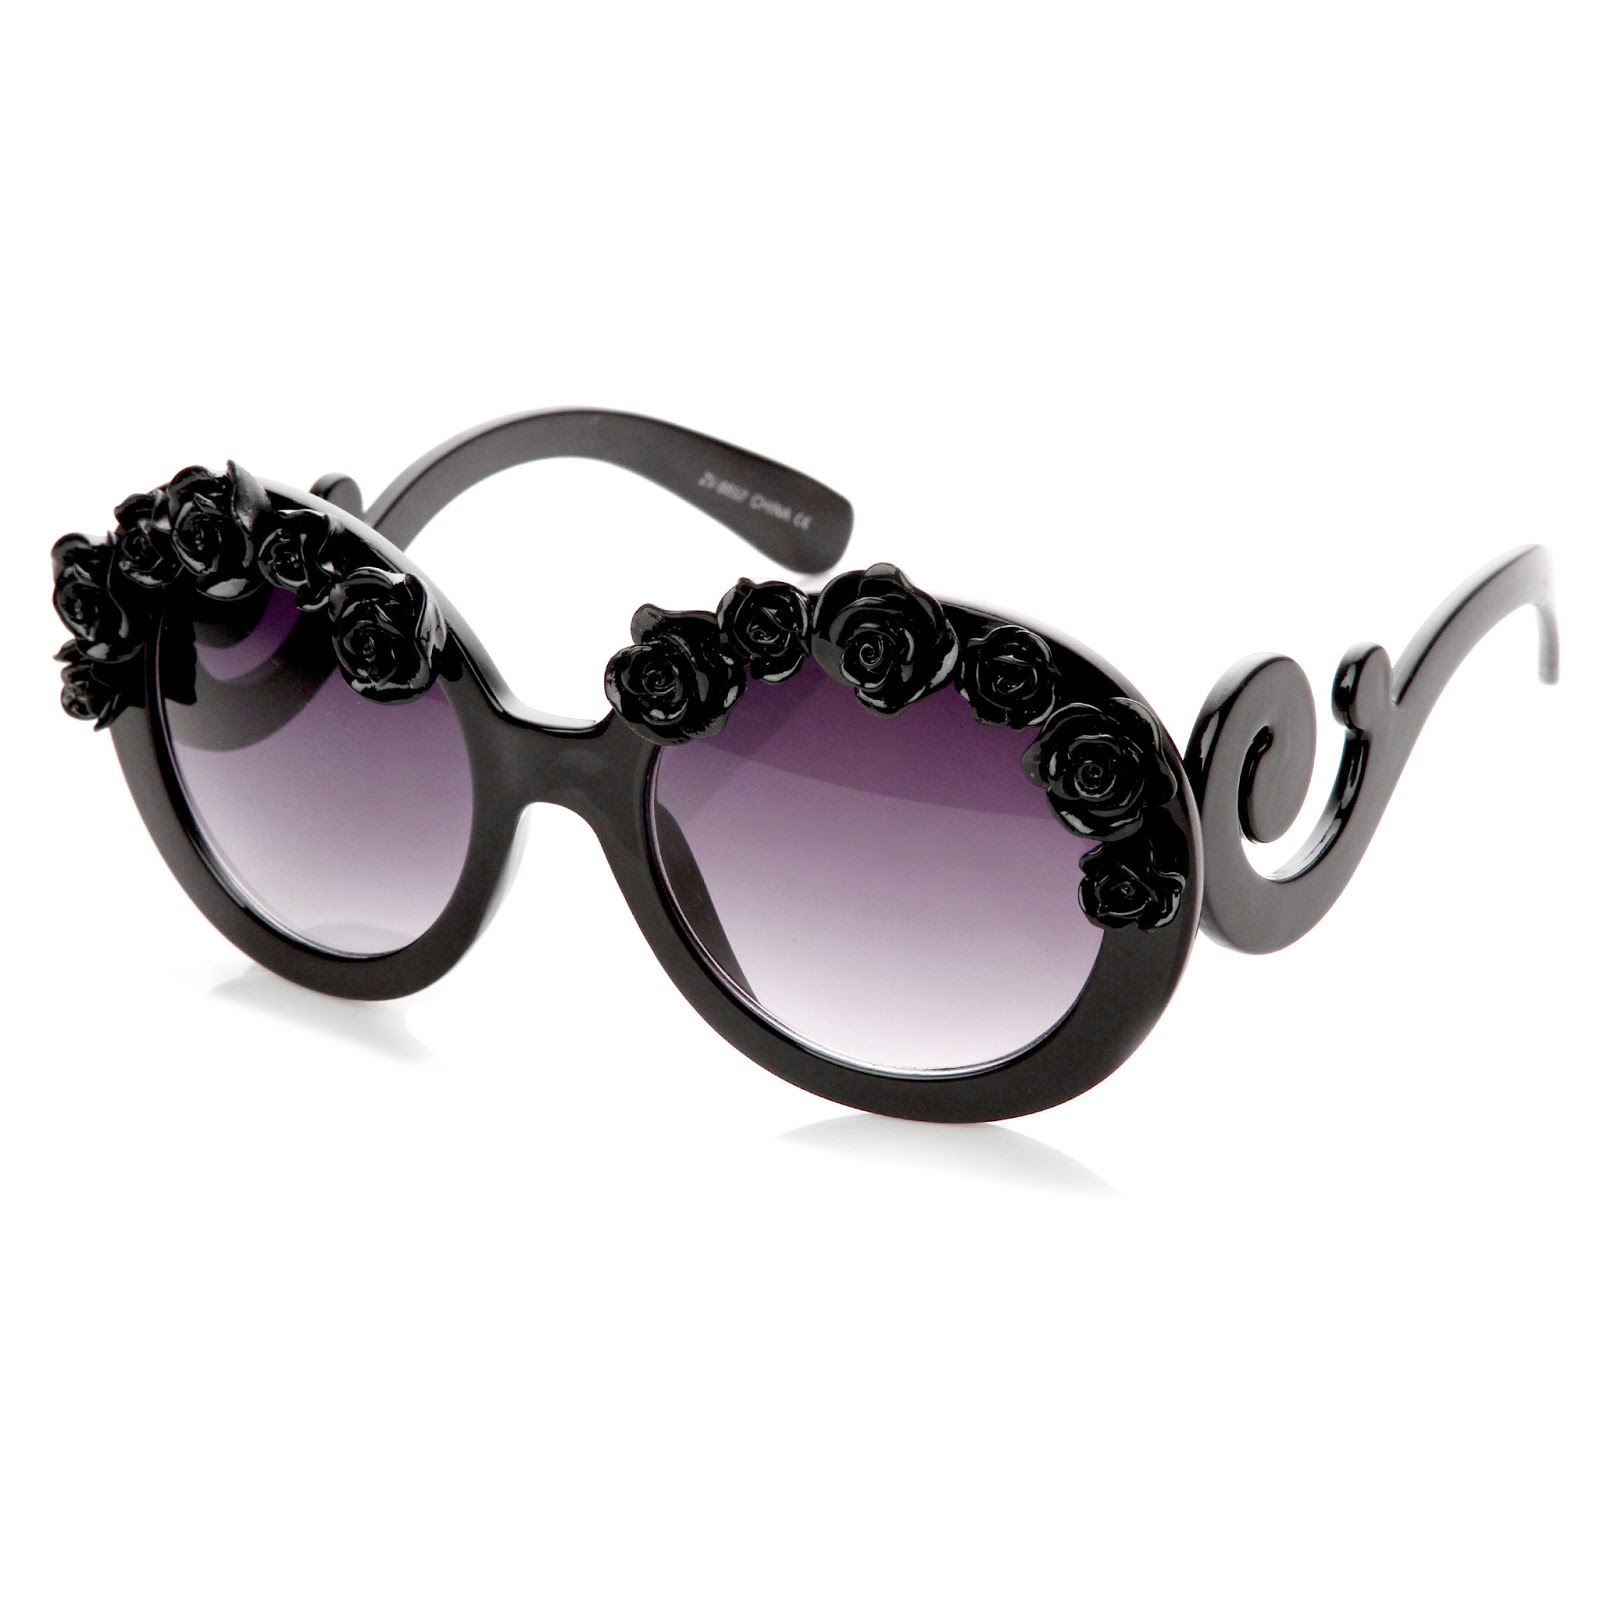 Lapin Chocolat: 10 Cute Sunglasses for Lolita Fashion